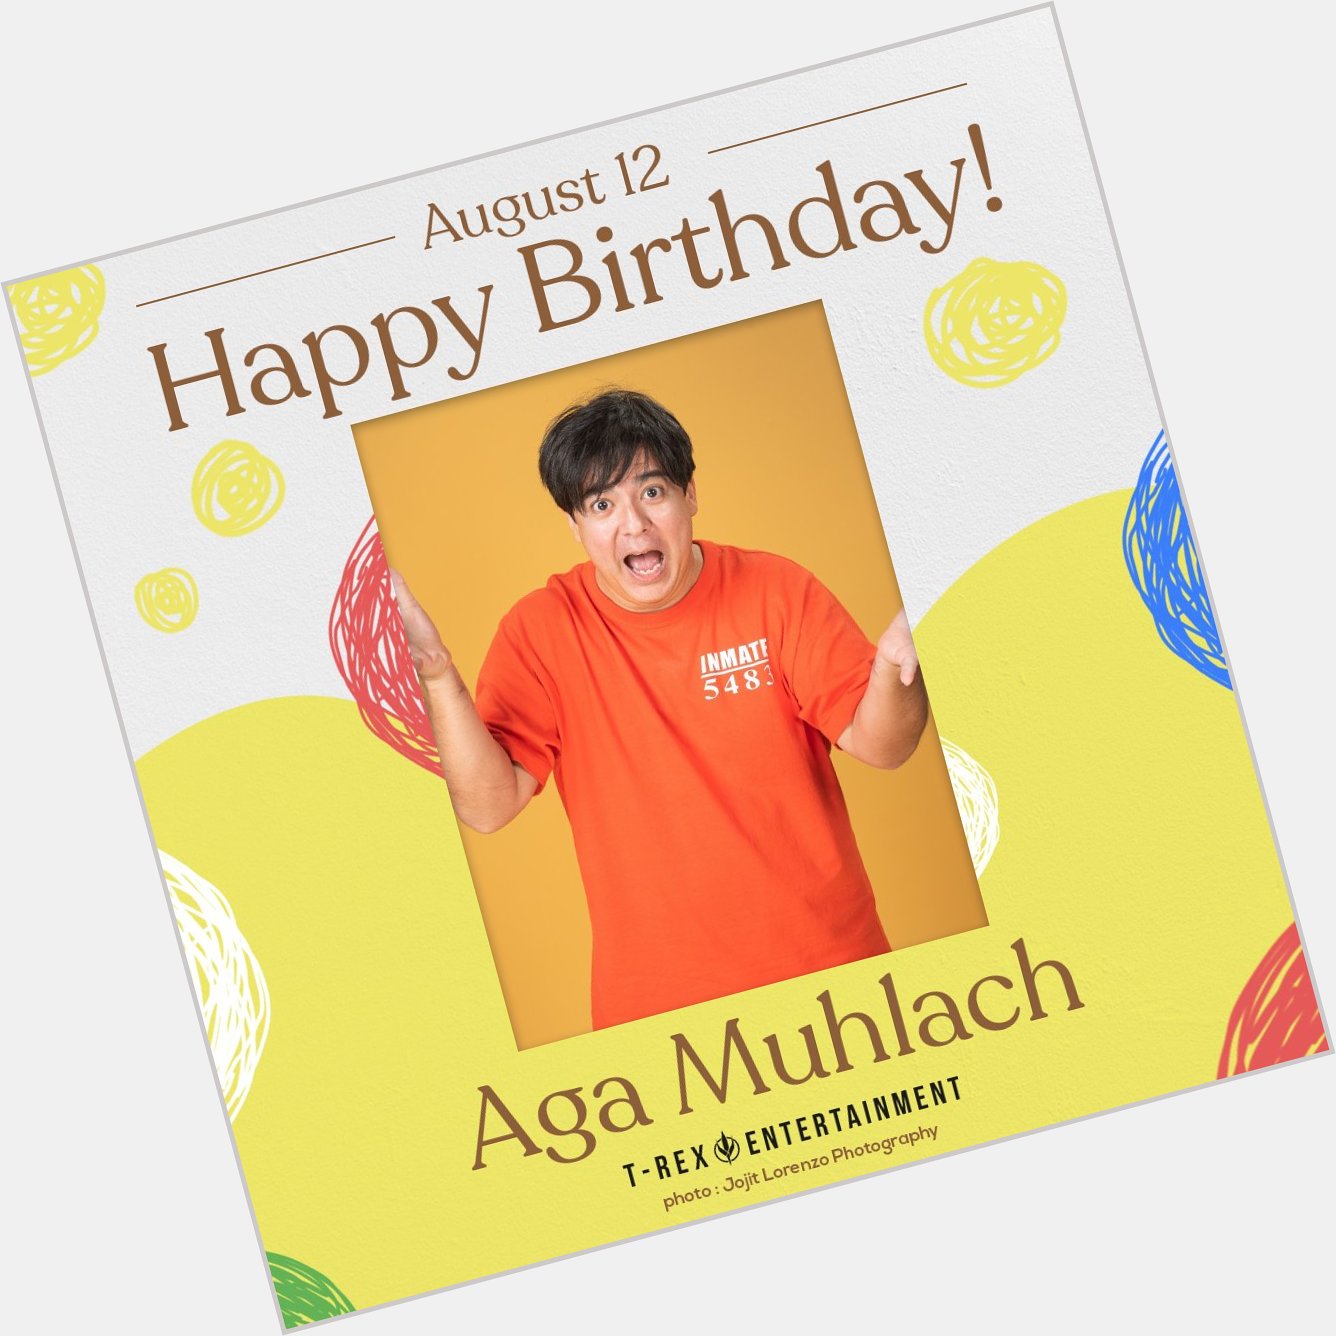 Happy birthday, Aga Muhlach!

Trivia: His birth name is Ariel Aquino Muhlach. He turns 51 today. 